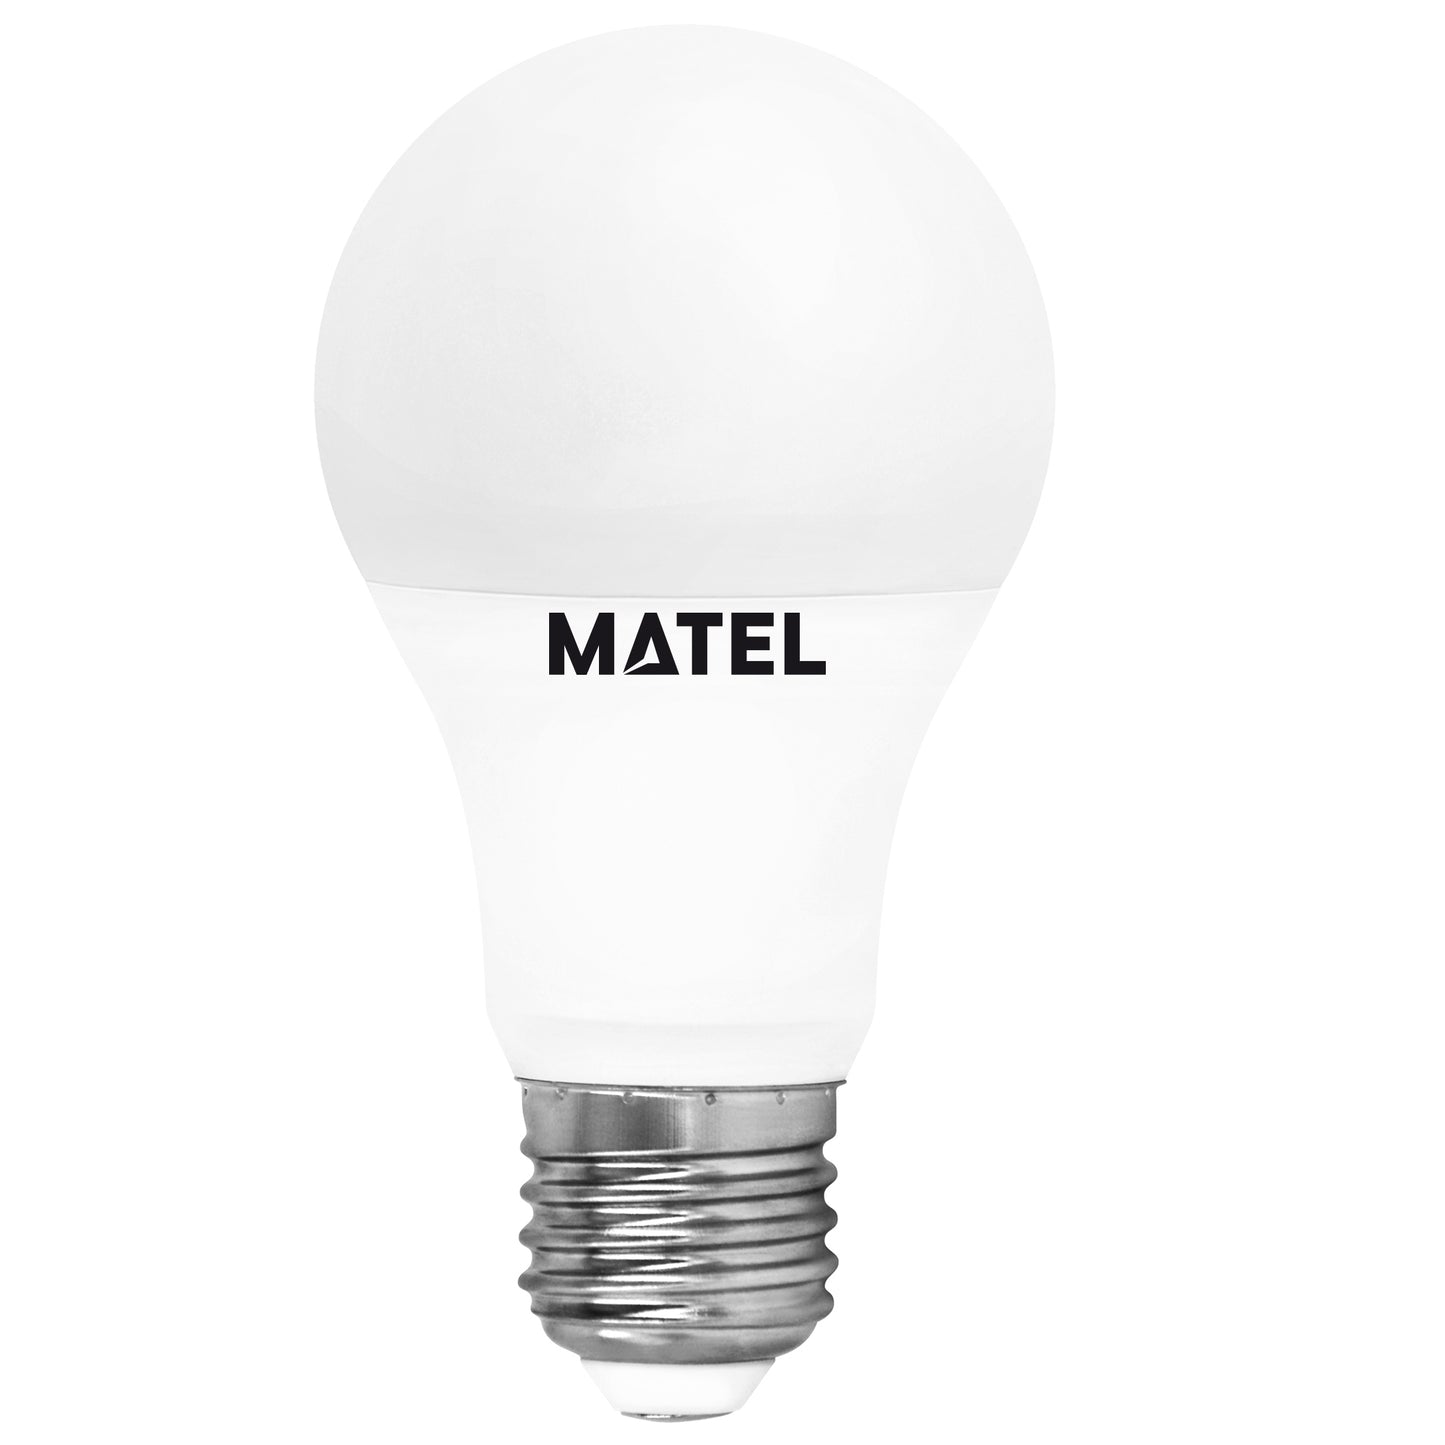 MATEL STANDARD E27 10W NEUTRAL LED LAMP (3 UNITS) 